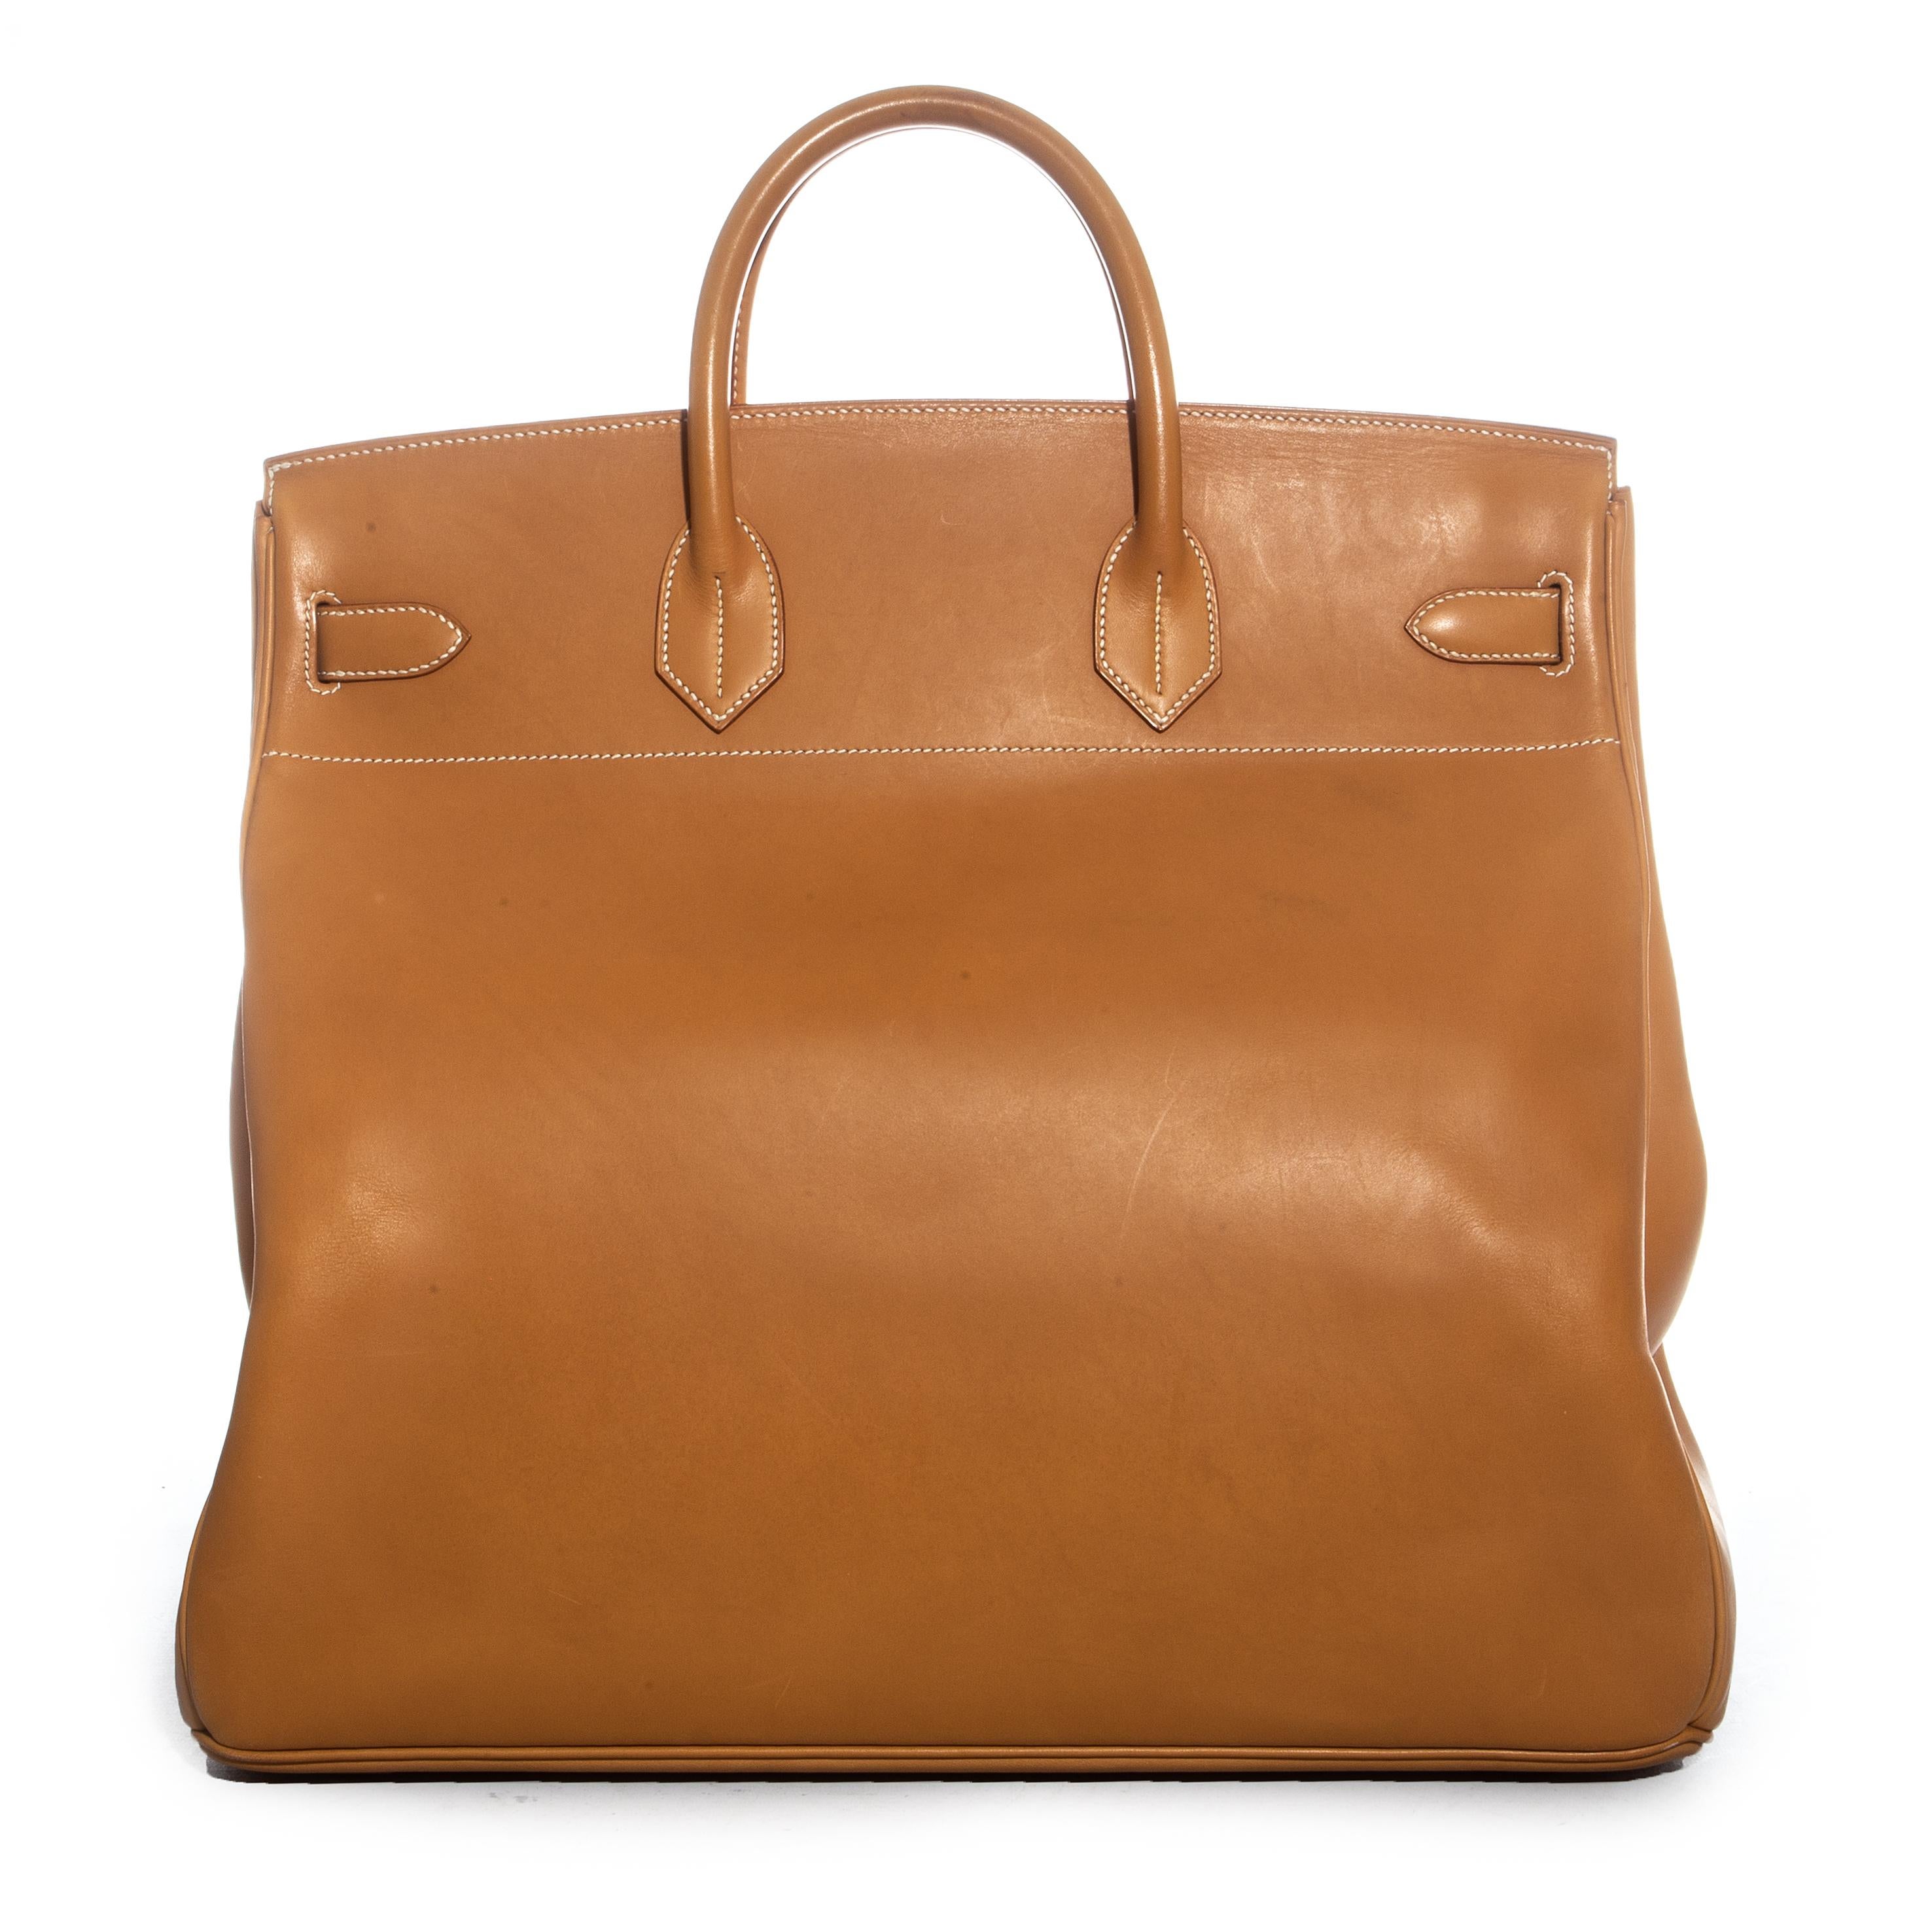 Orange Hermes Tan leather HAC Birkin bag, size 45, c. 1998 